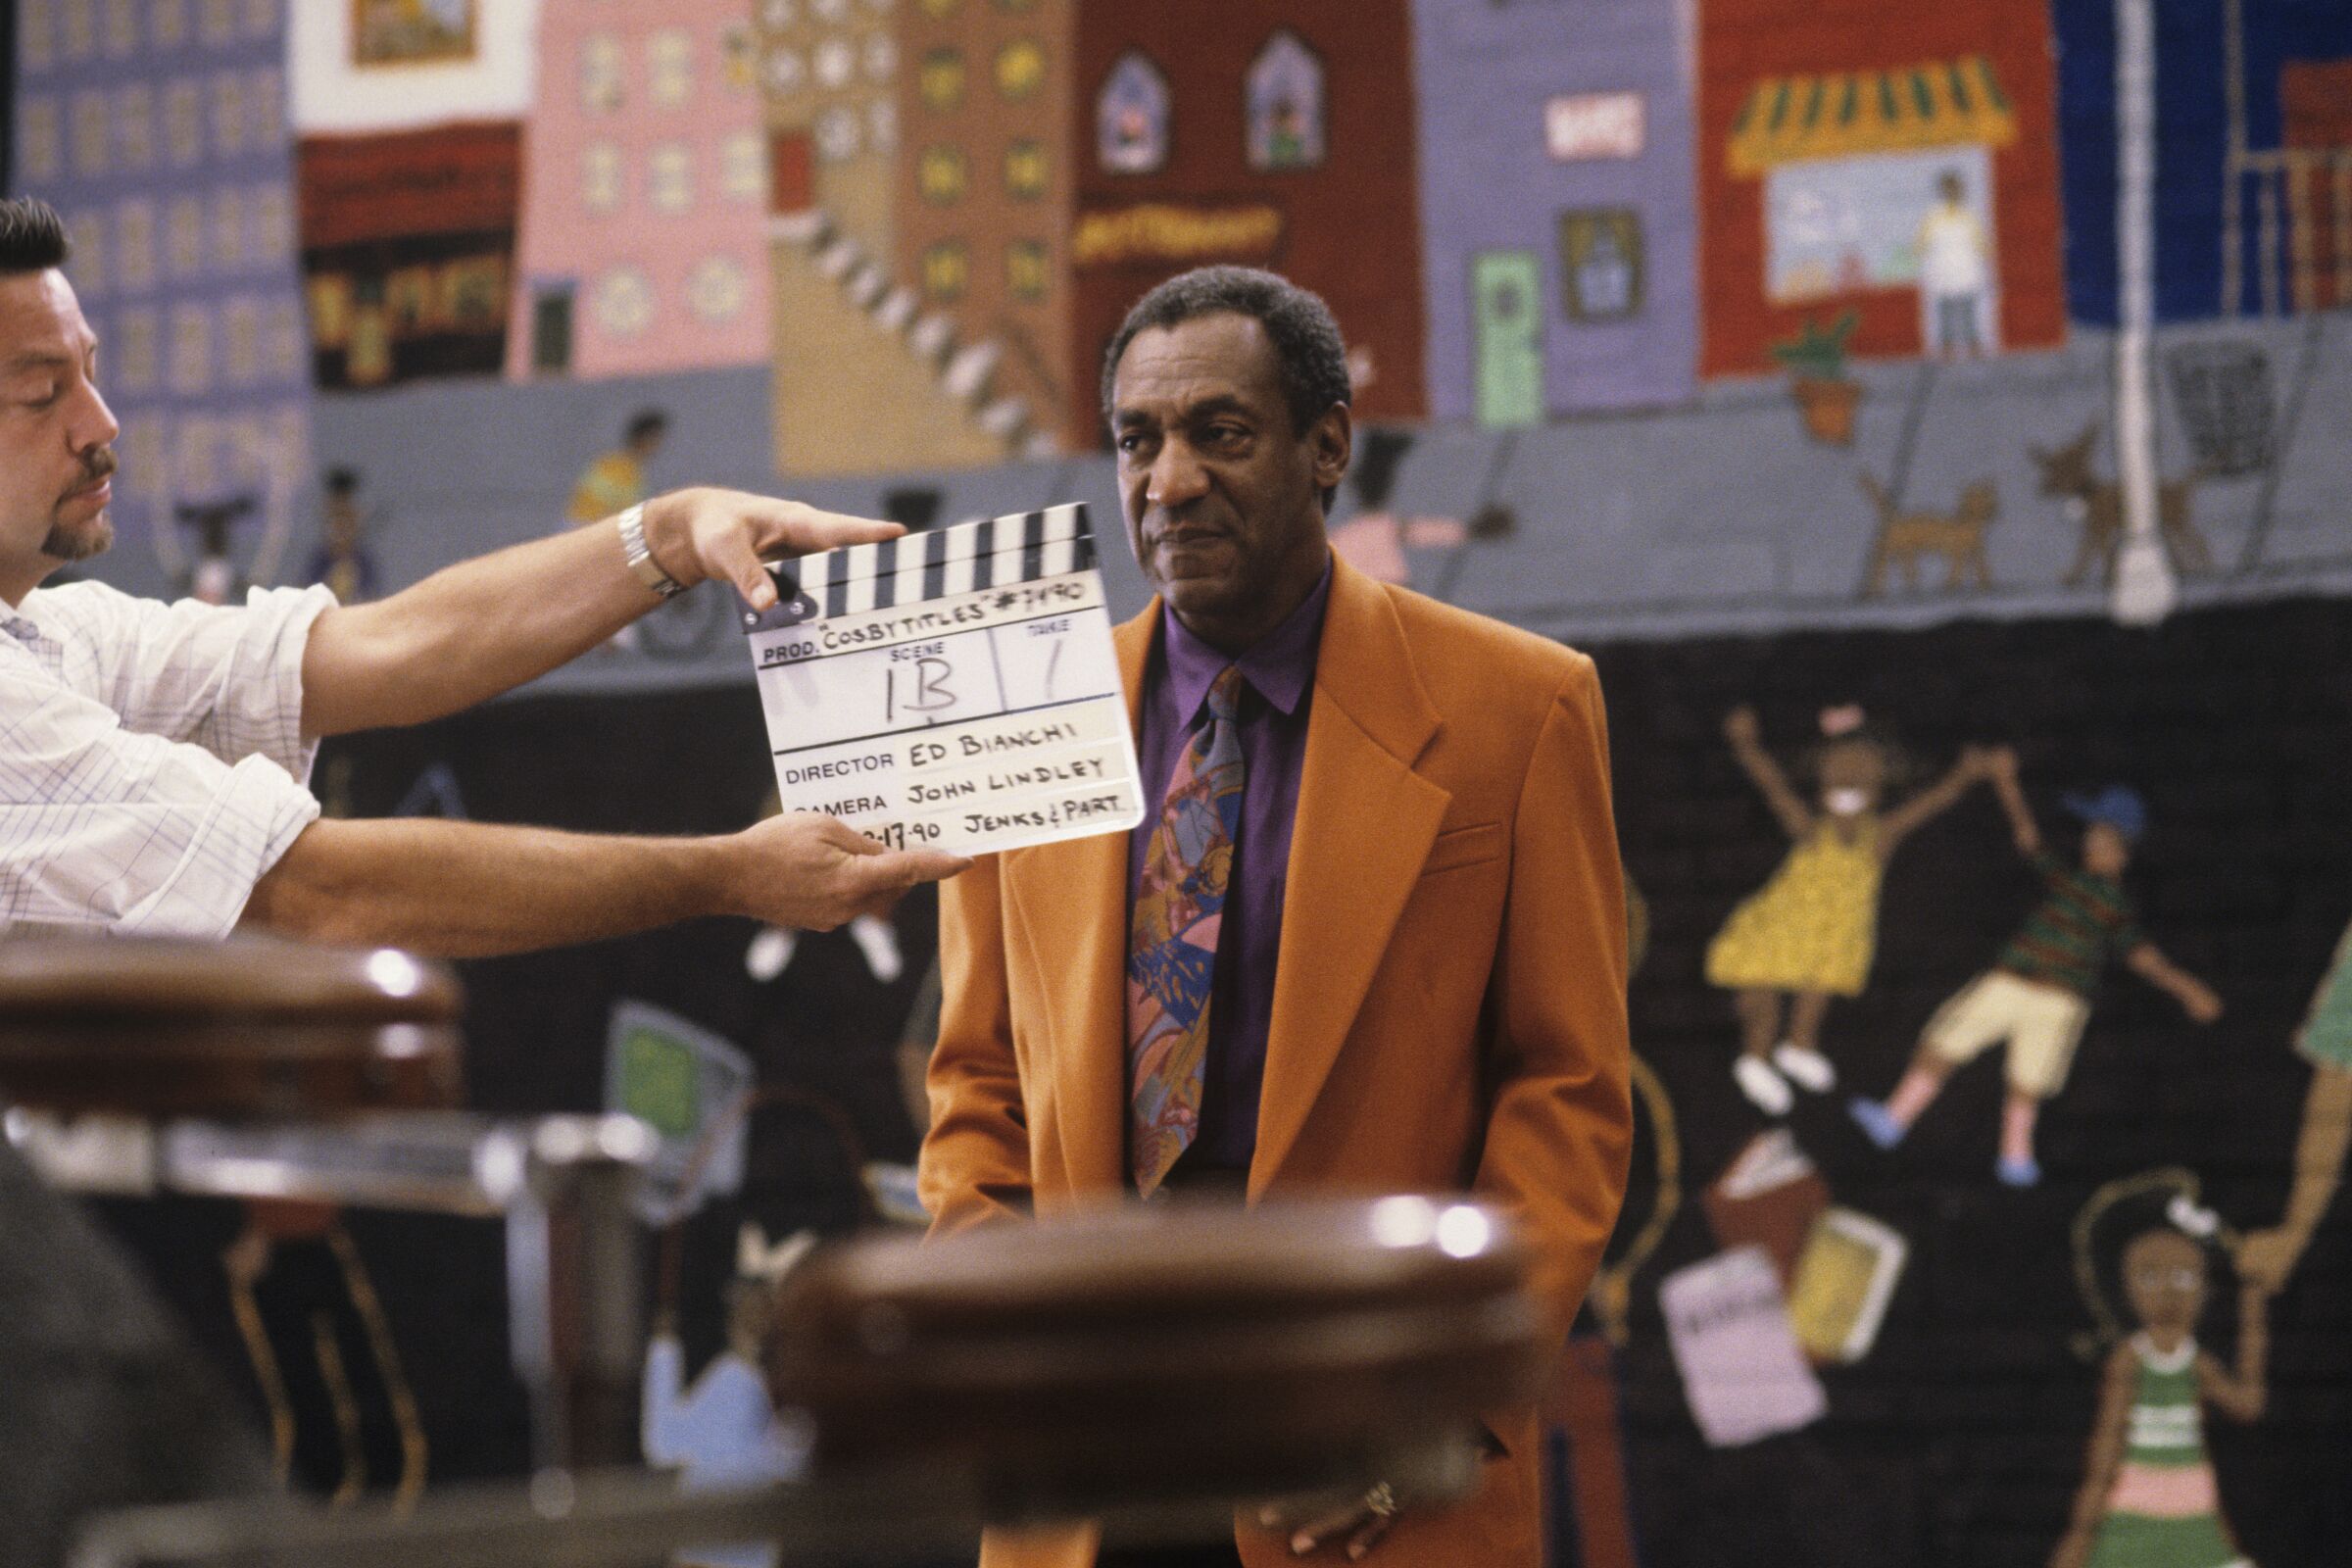 Bill Cosby in an orange suit on a TV set